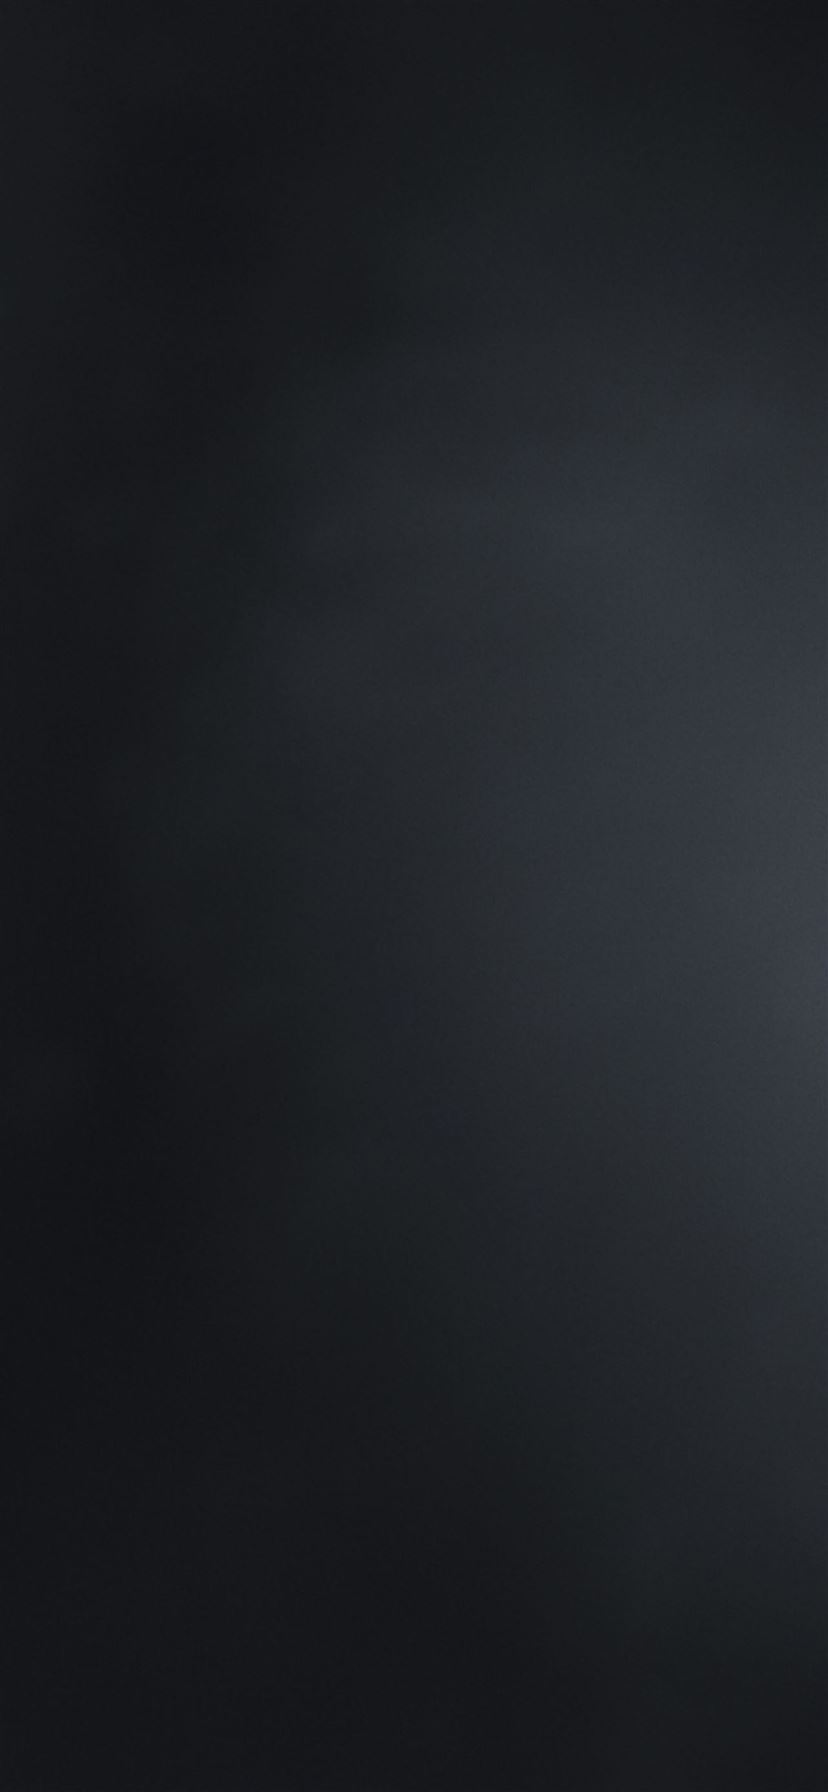 iOS 14 Wallpaper 4K WWDC 2020 iPhone 12 BlackDark 1447